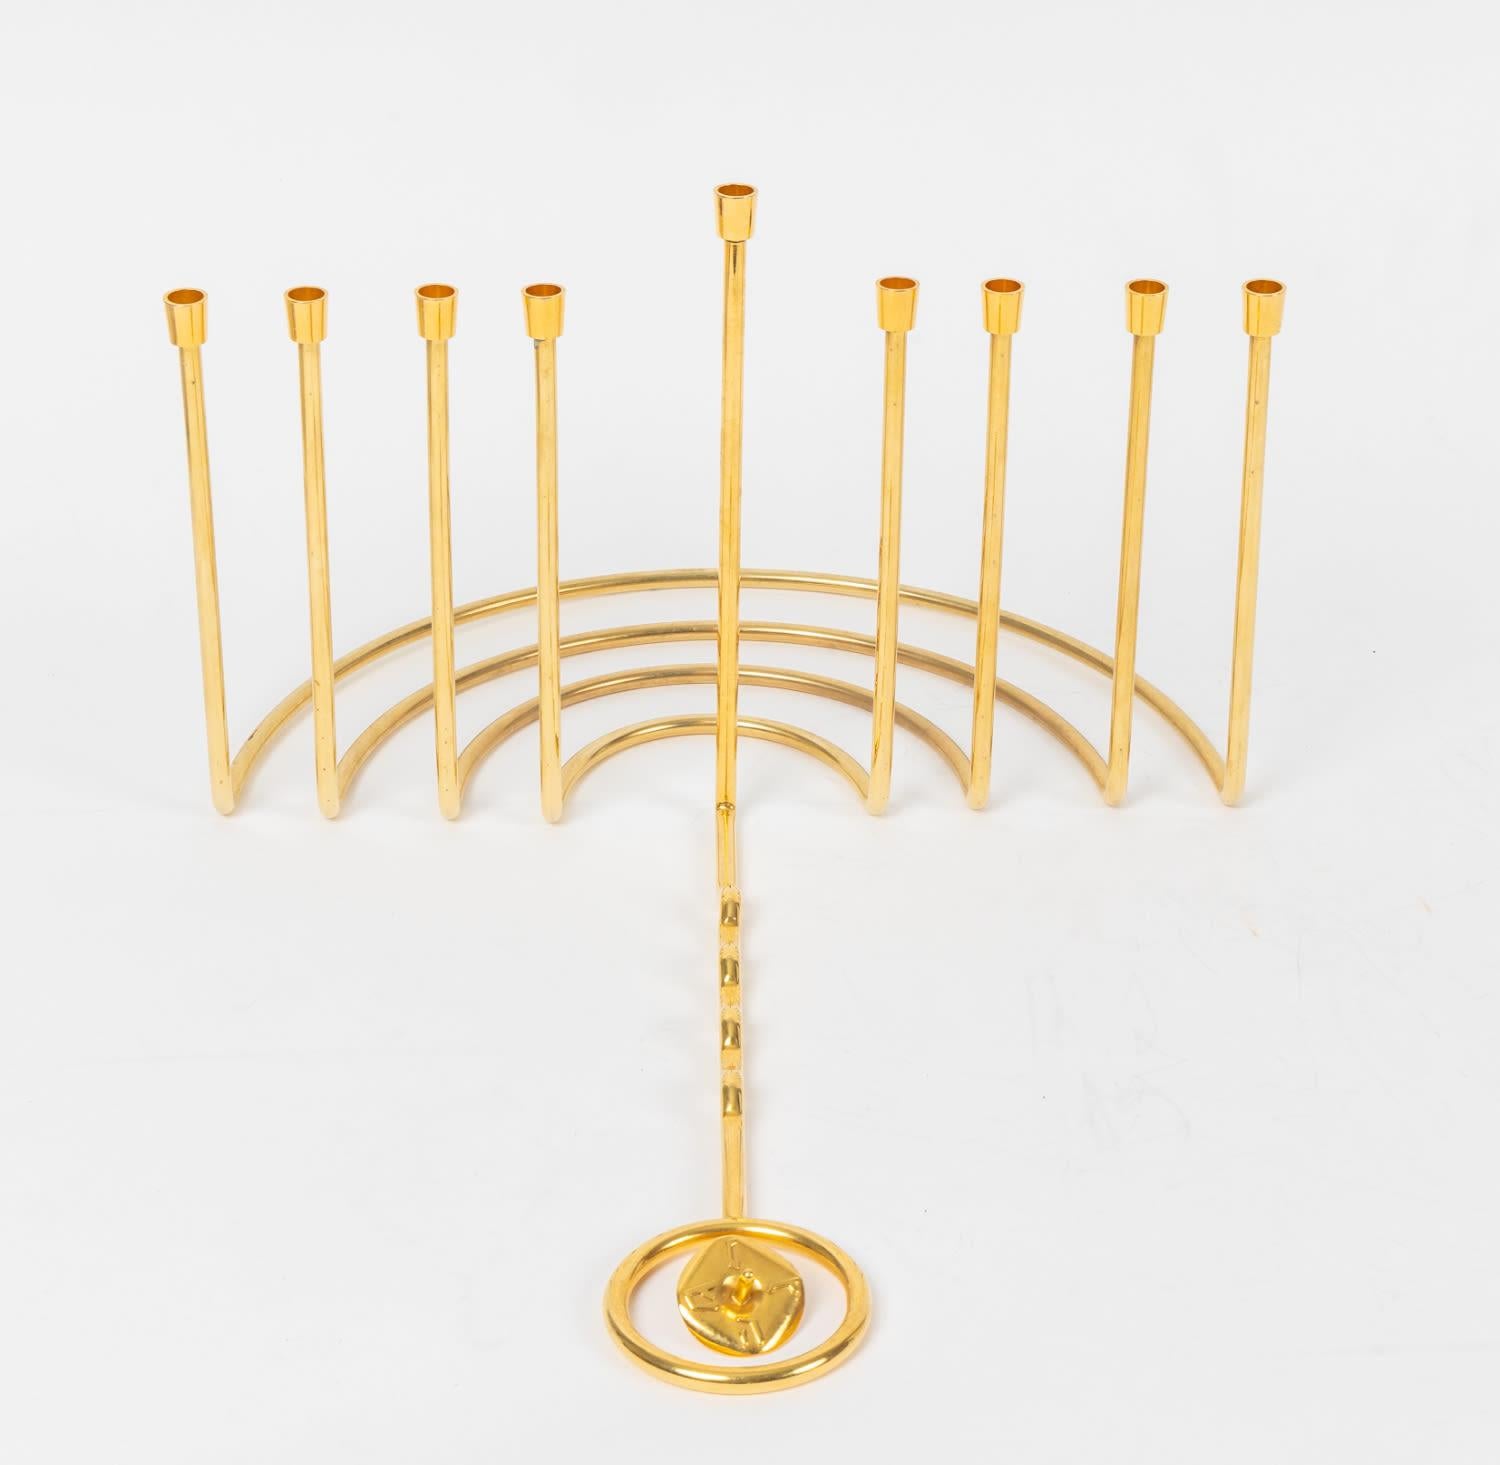 Brass A Unique Chanukkiah of gilt brass, by the Foremost Israeli Artist Moshe Zabari